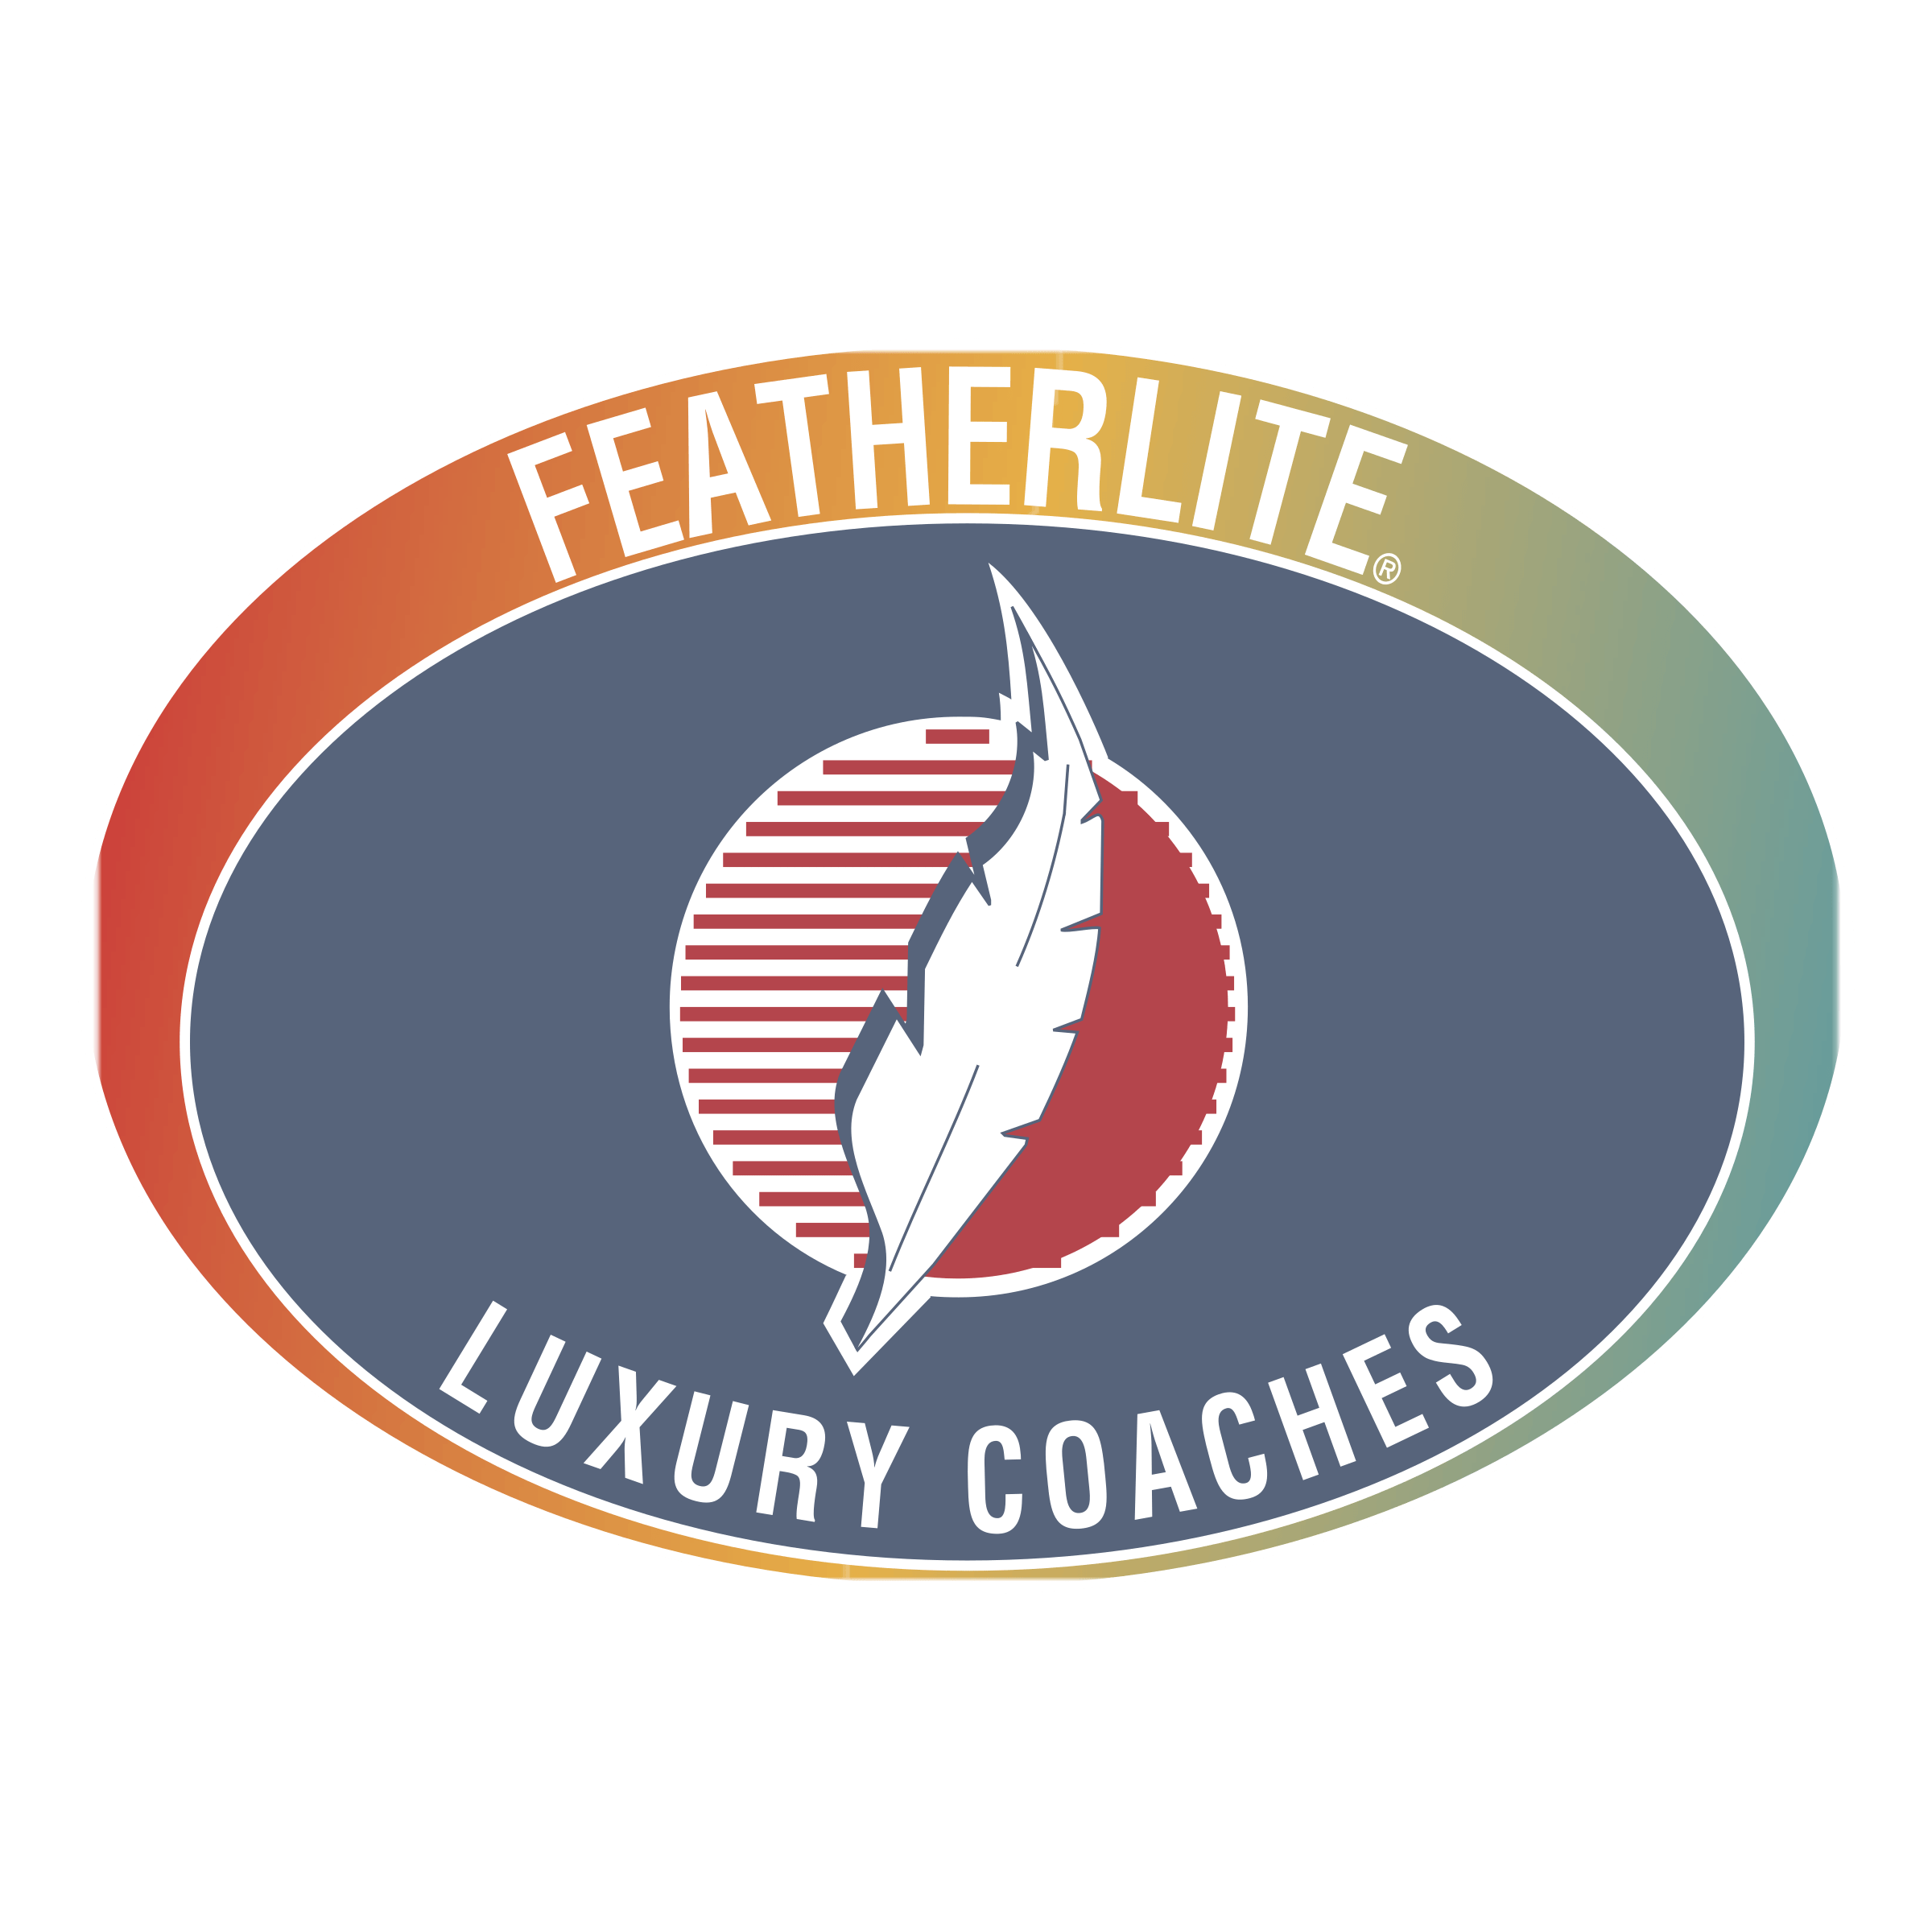 Featherlite Logo - Featherlite Logo PNG Transparent & SVG Vector